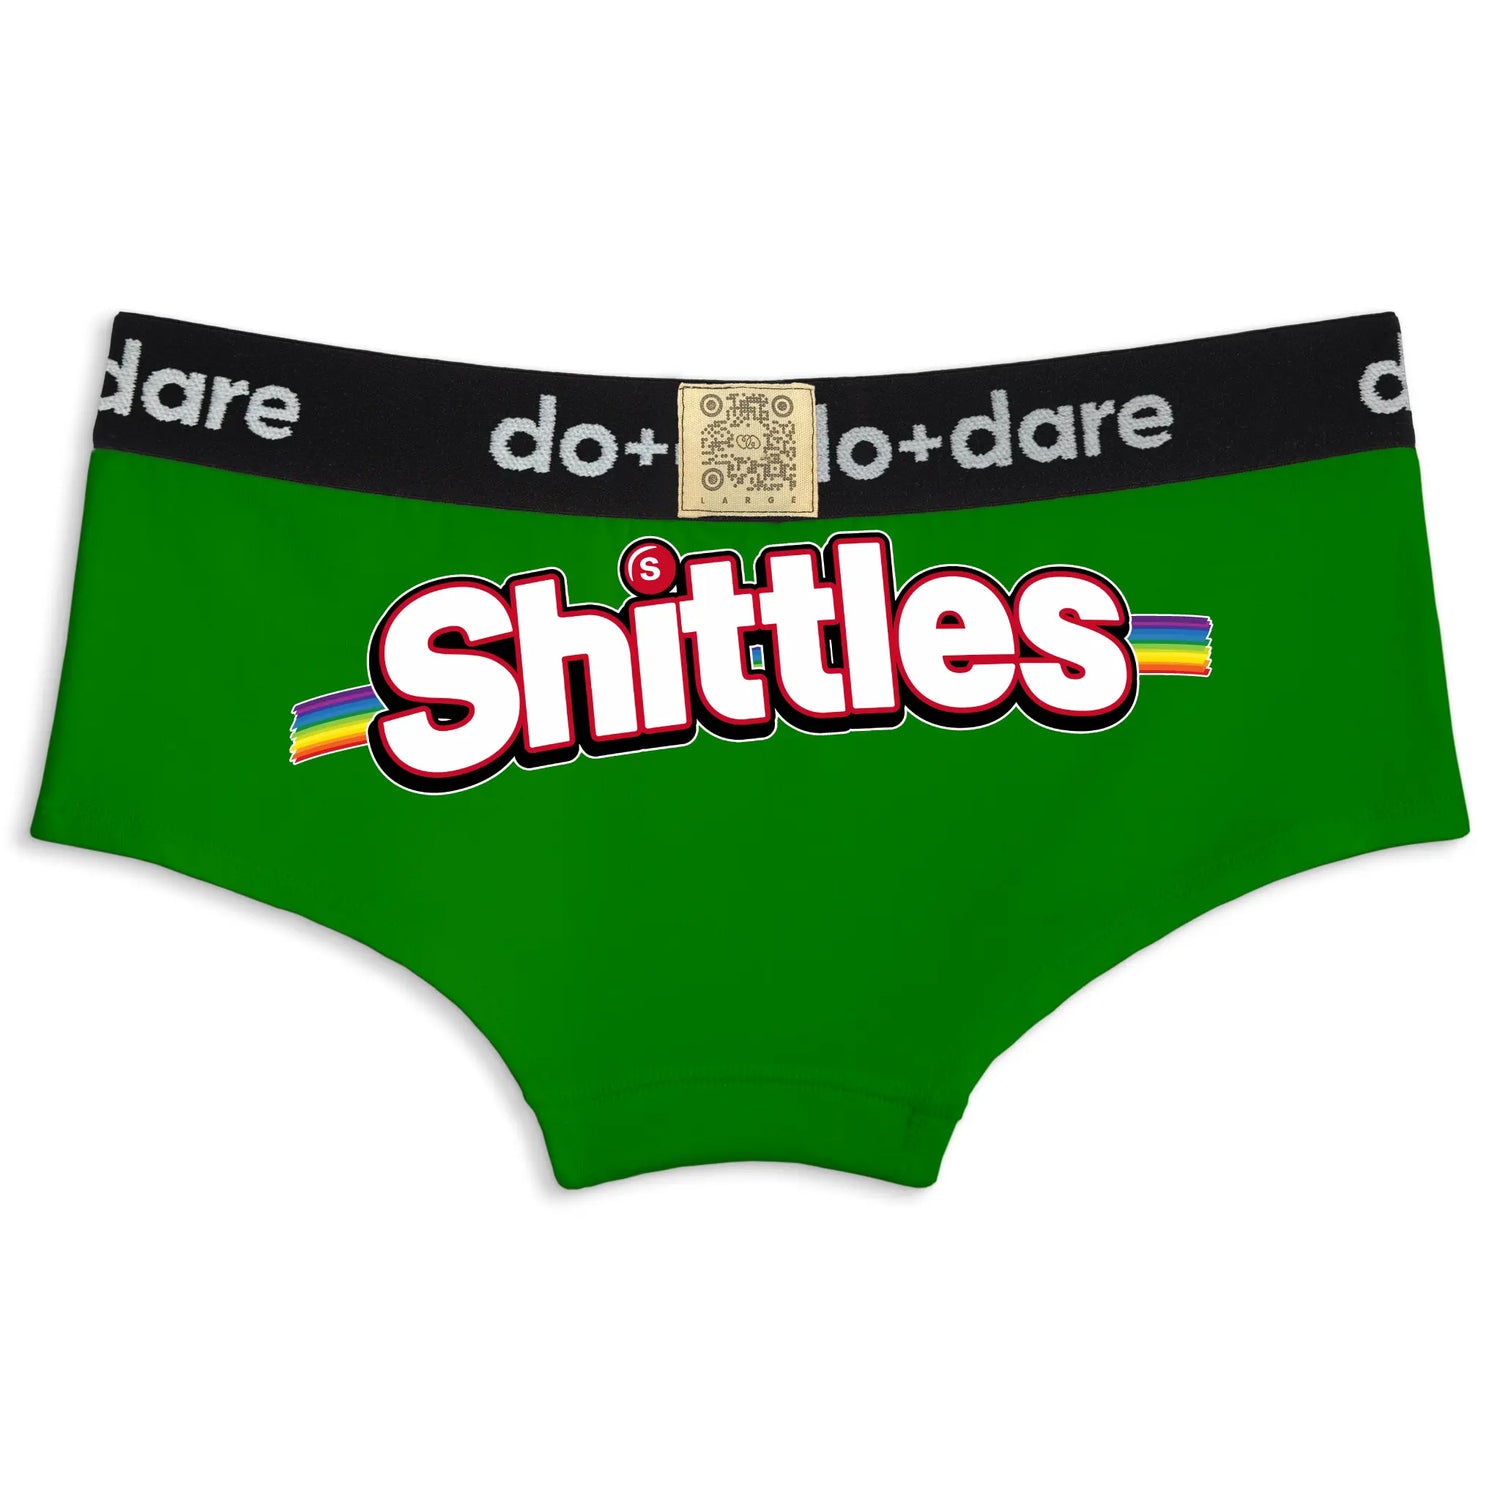 Shittles | Boyshort Undies